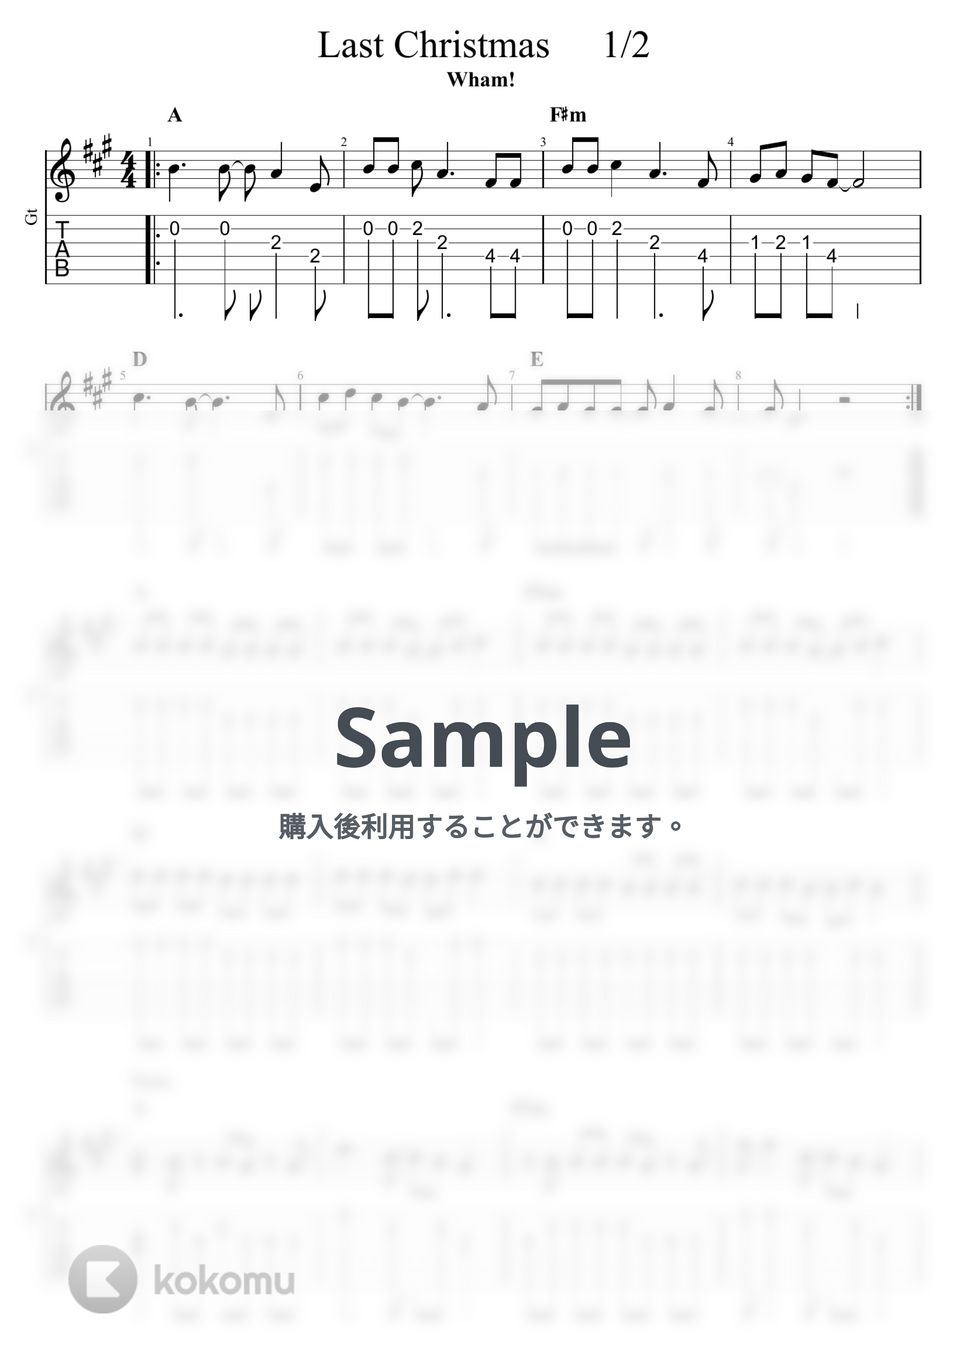 Wham! - Last Christmas（メロディタブ譜+五線譜） by 杉山つよし